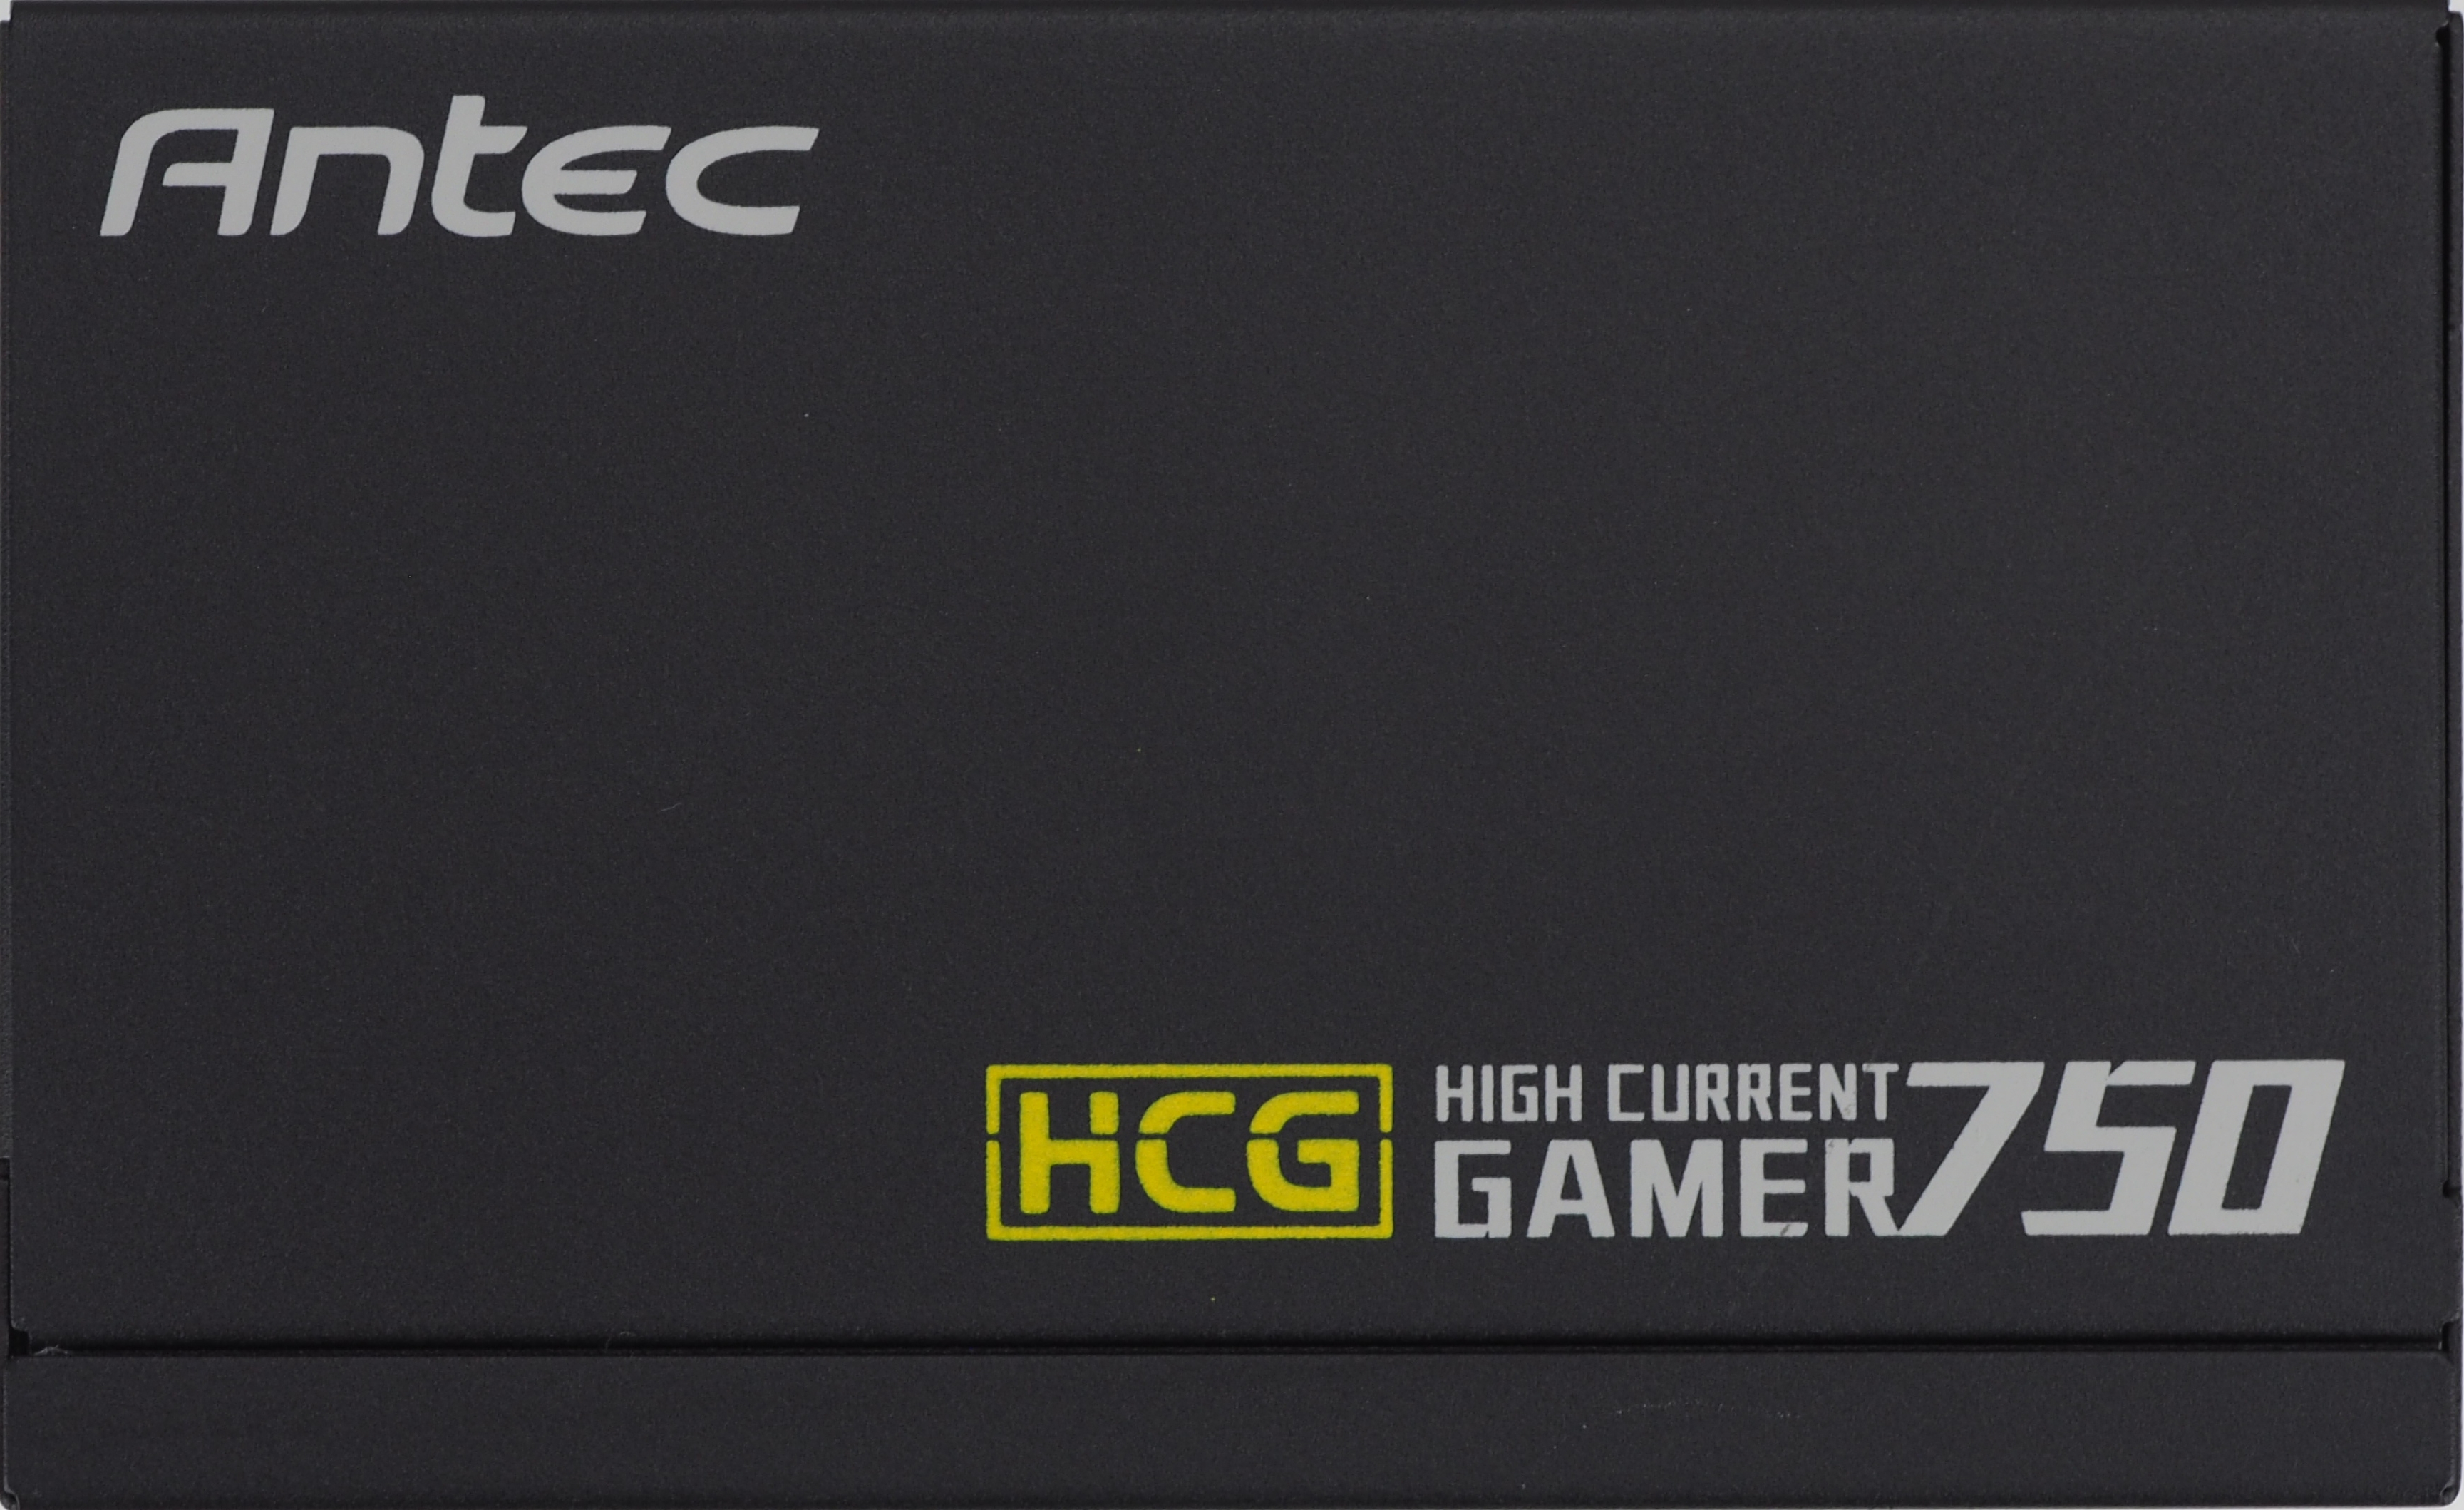 Antec High Current Gamer HCG-1000W Gold - Alimentation PC Antec sur